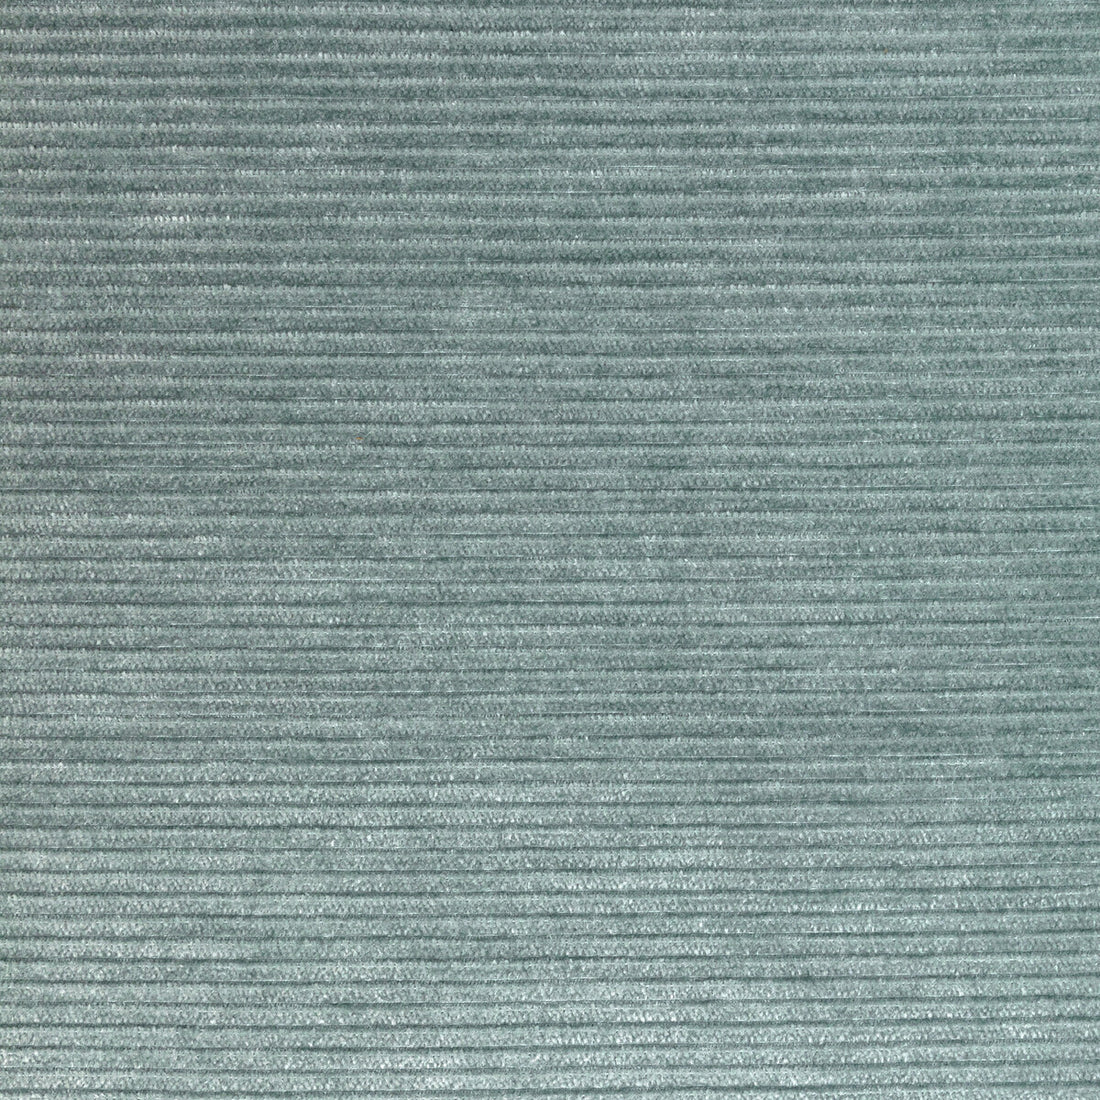 Kravet Smart fabric in 36651-115 color - pattern 36651.115.0 - by Kravet Smart in the Performance Kravetarmor collection